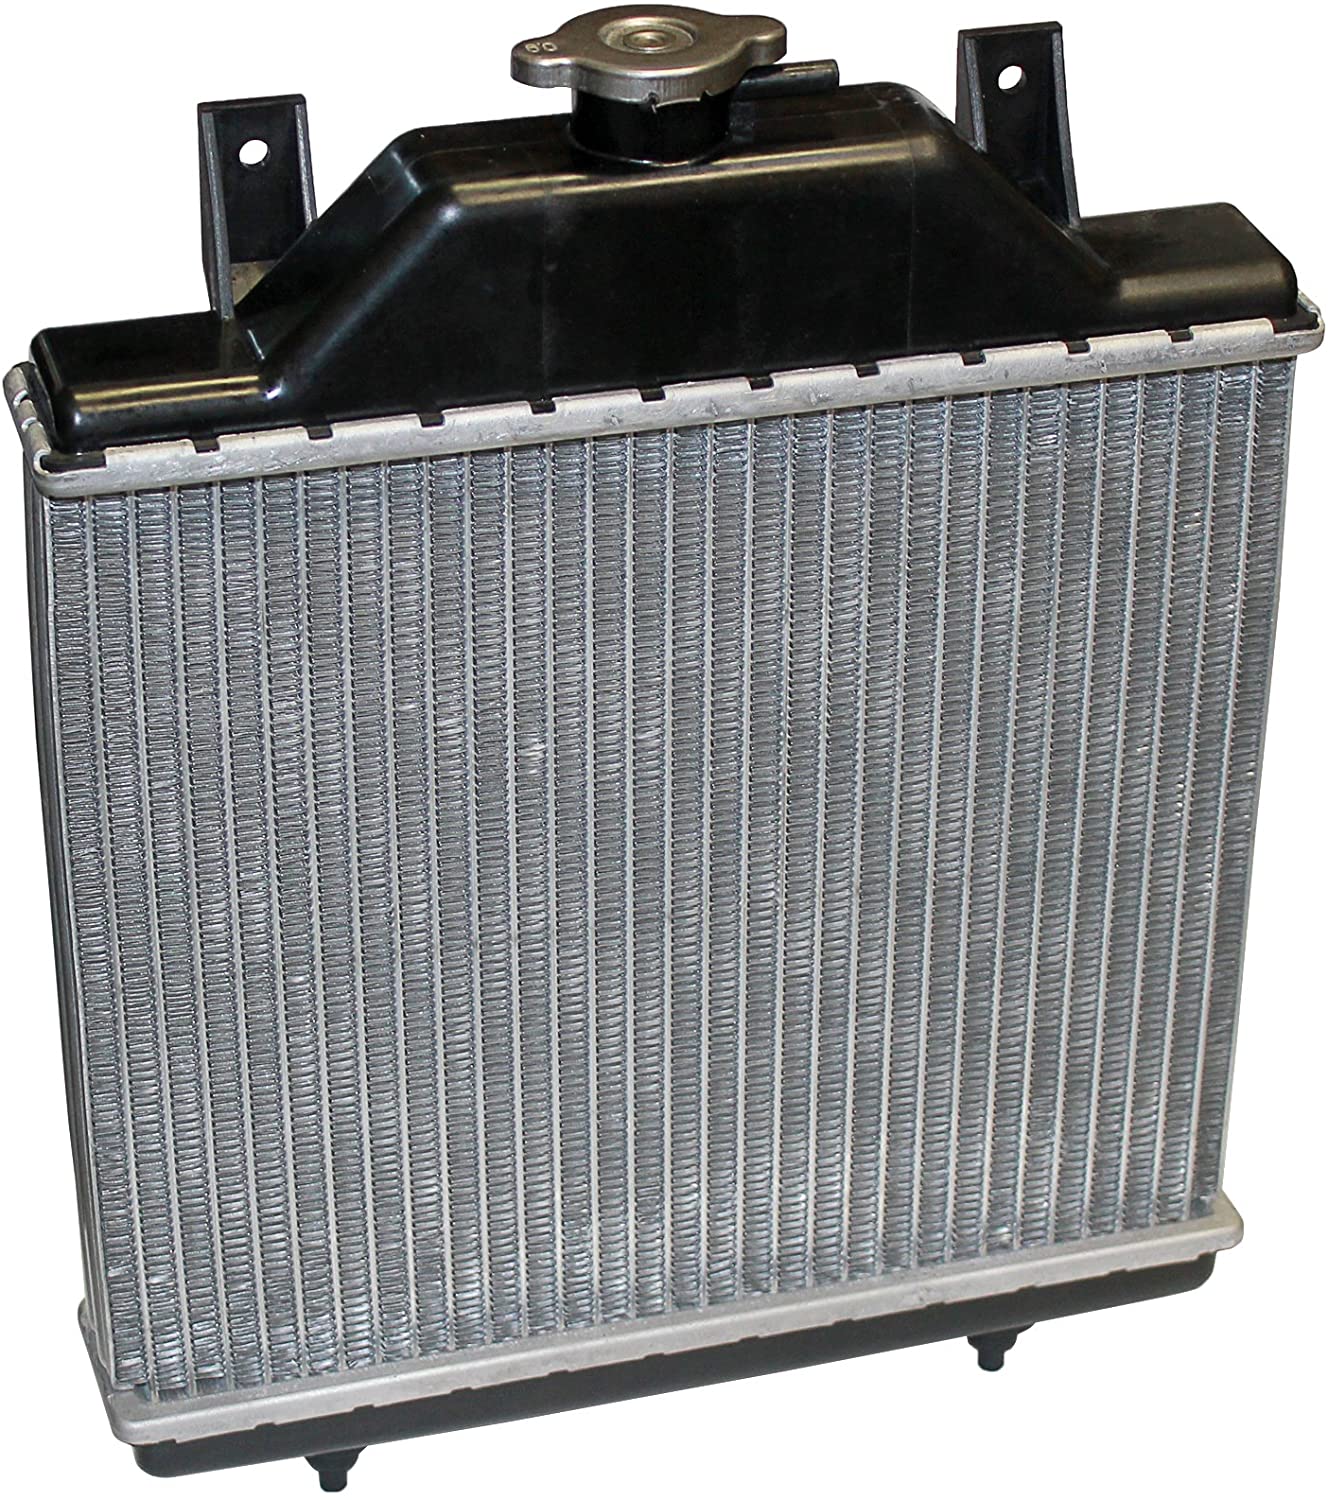 Caltric Radiator Compatible With Polaris Xplorer 400L 400-L 1996-1998 / Xplorer 500 1997